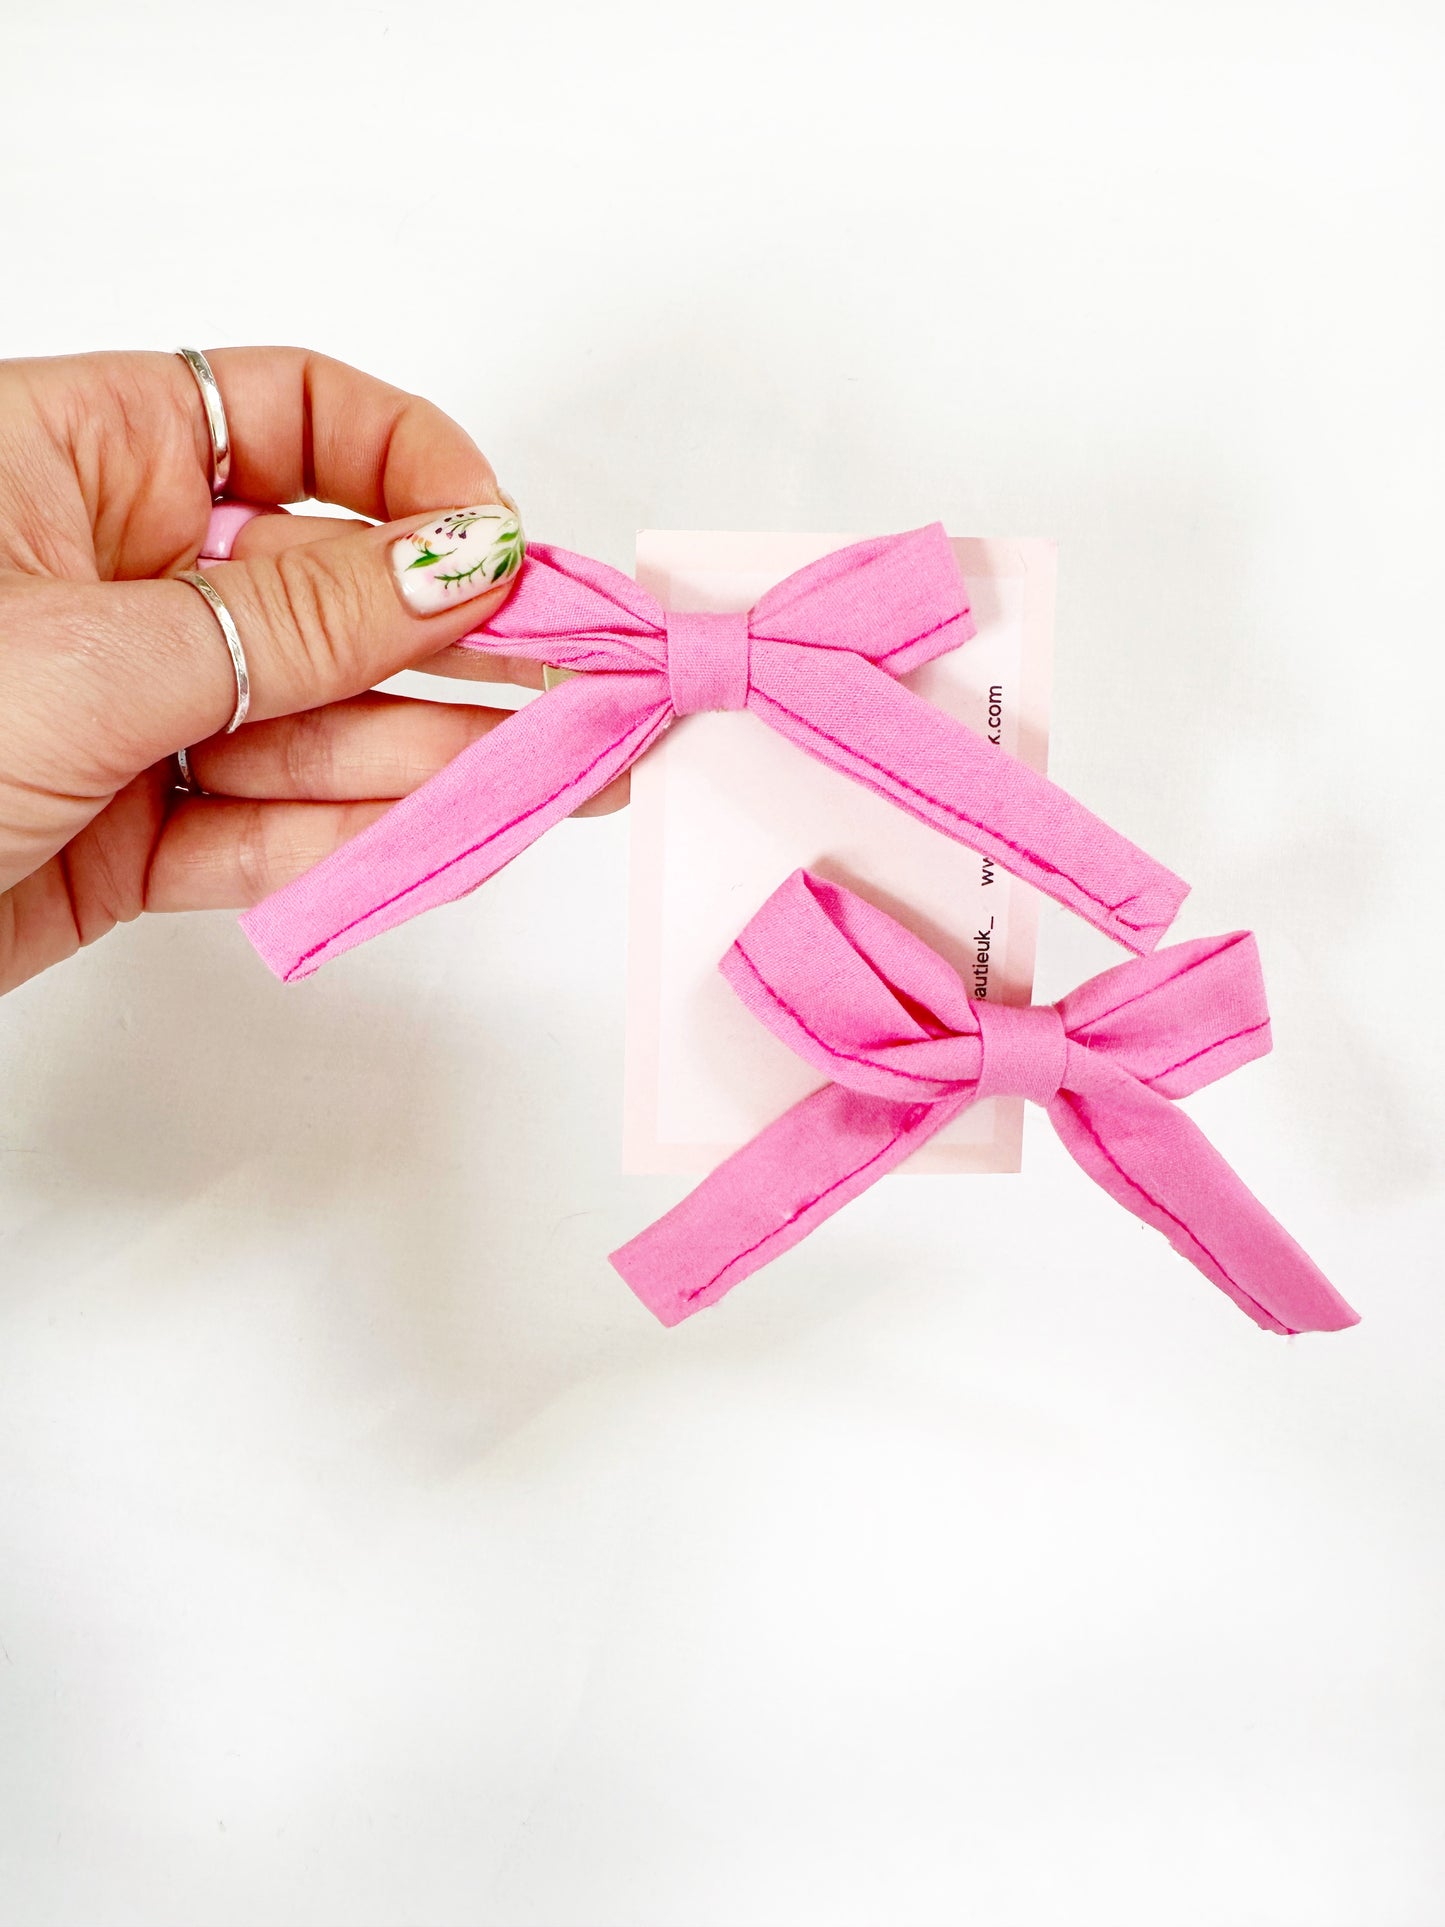 Bonnie mini hair bow set in pop of pink